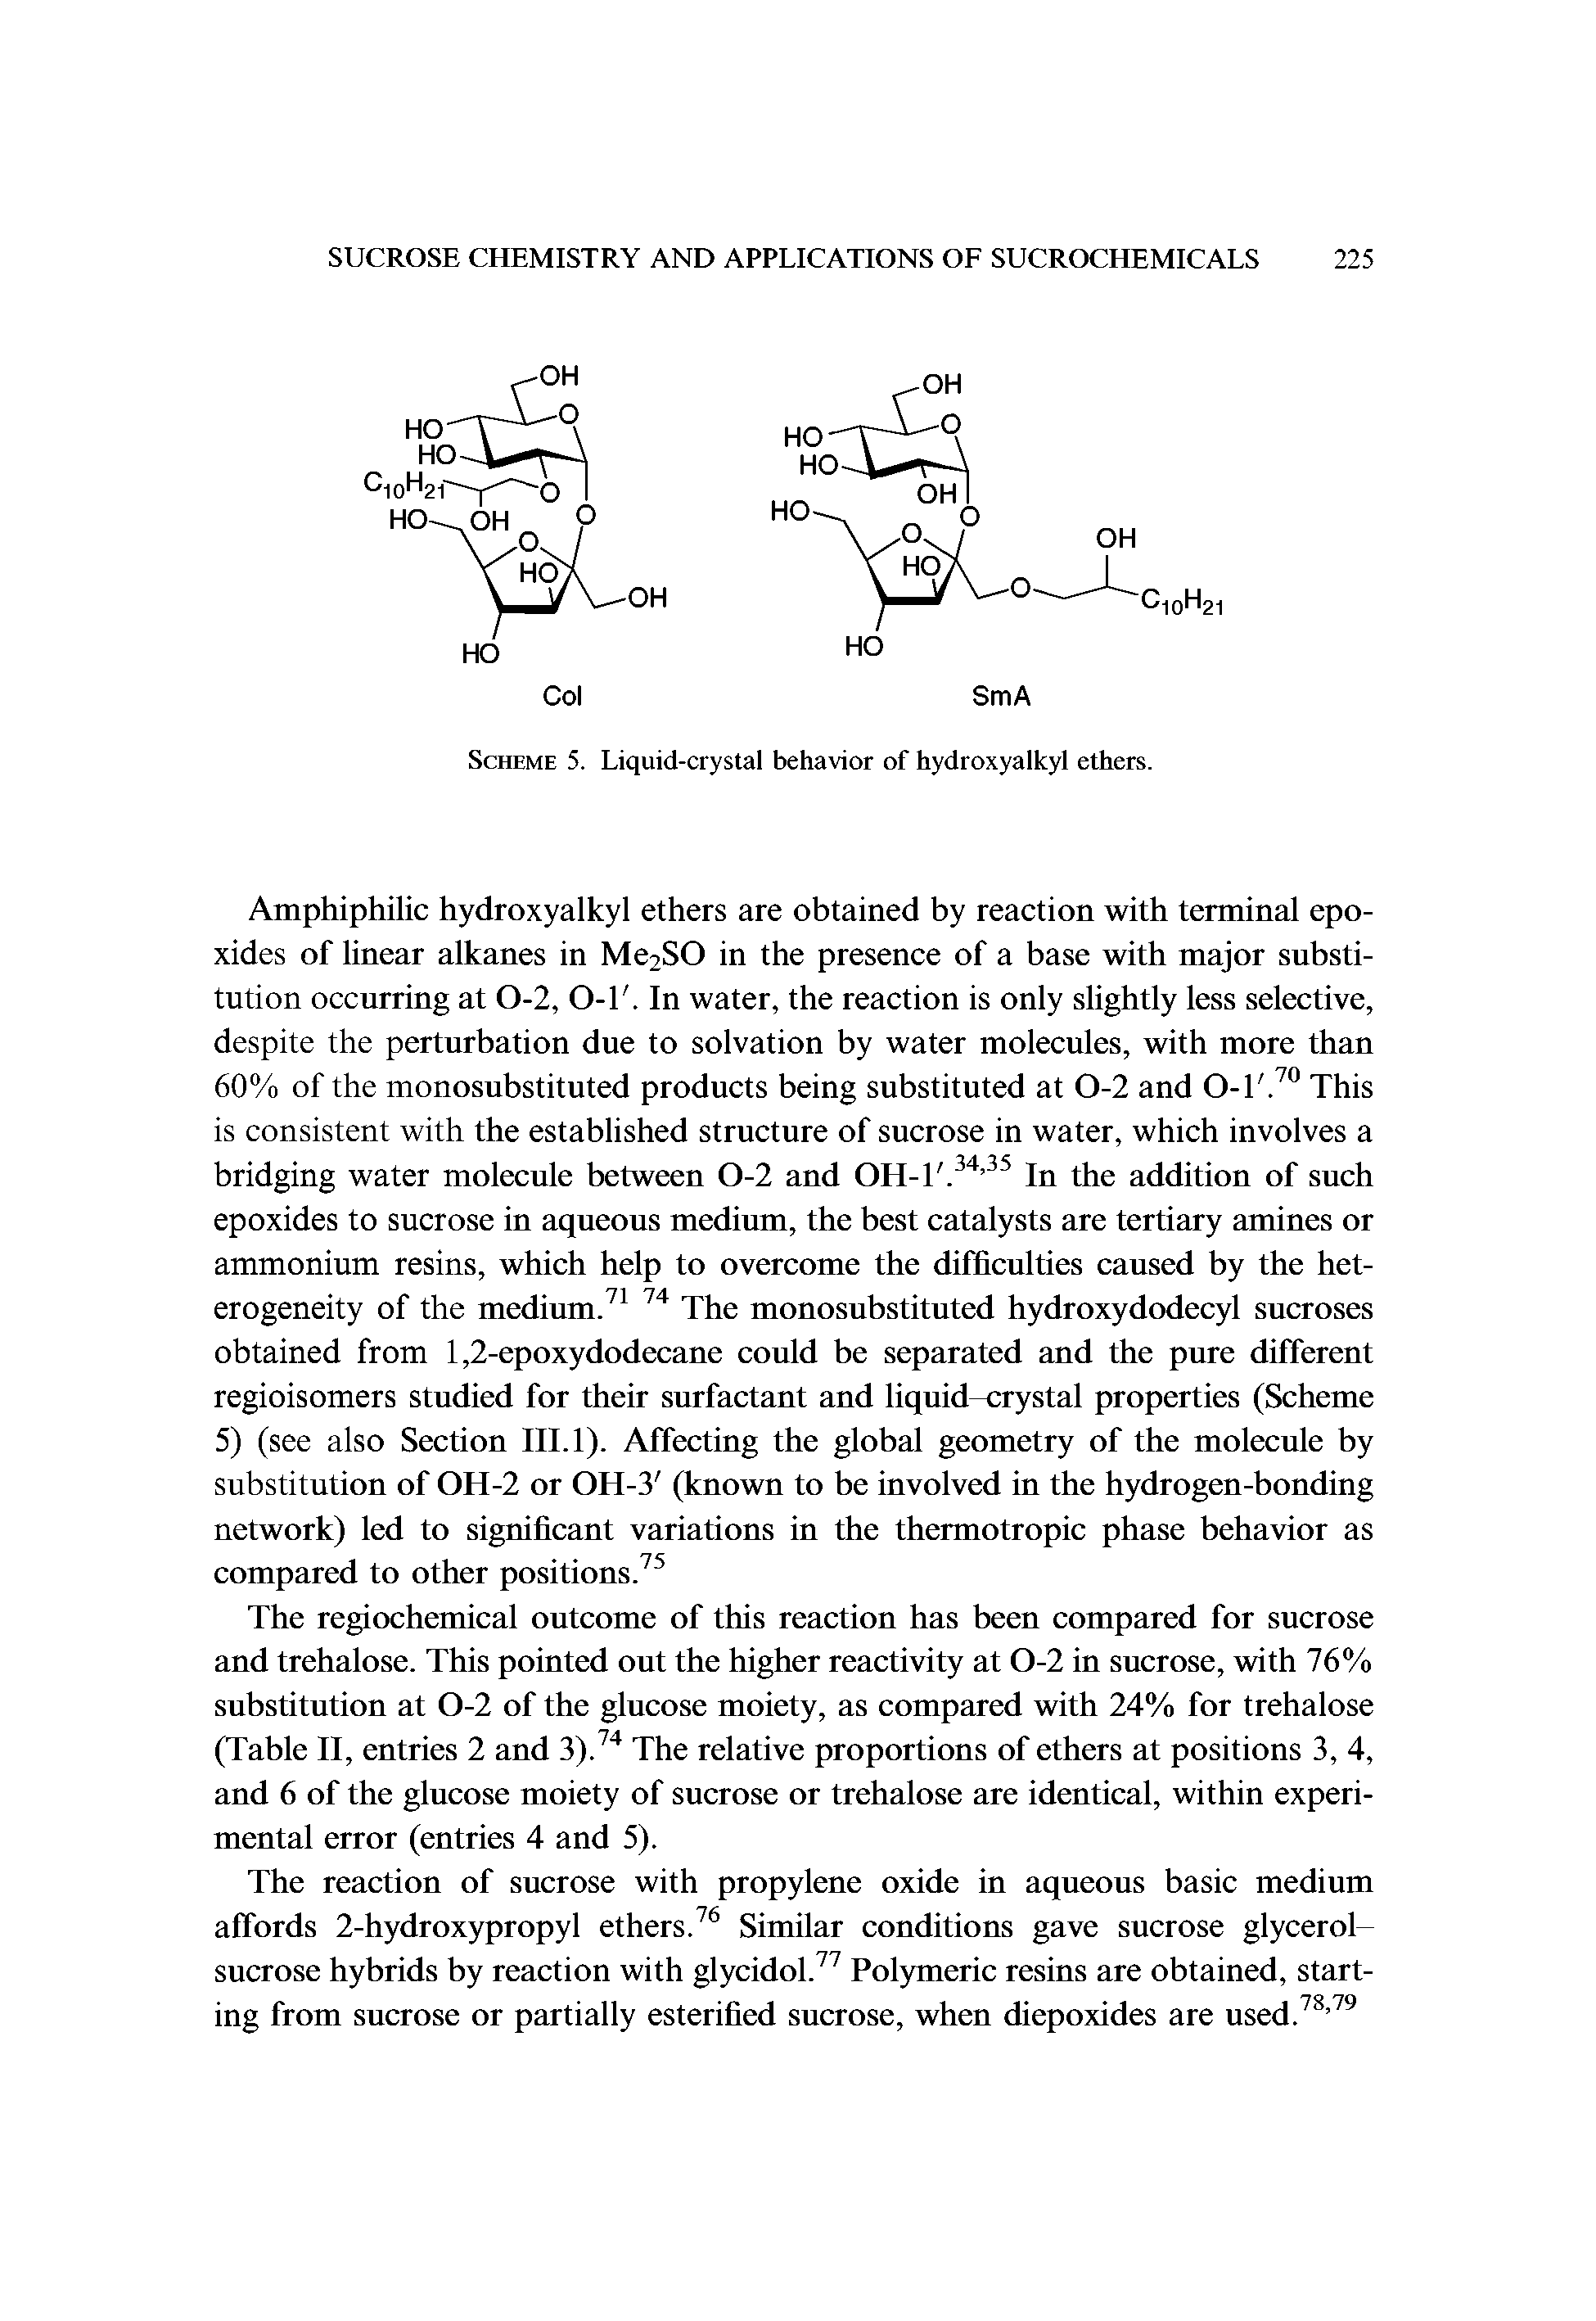 Scheme 5. Liquid-crystal behavior of hydroxyalkyl ethers.